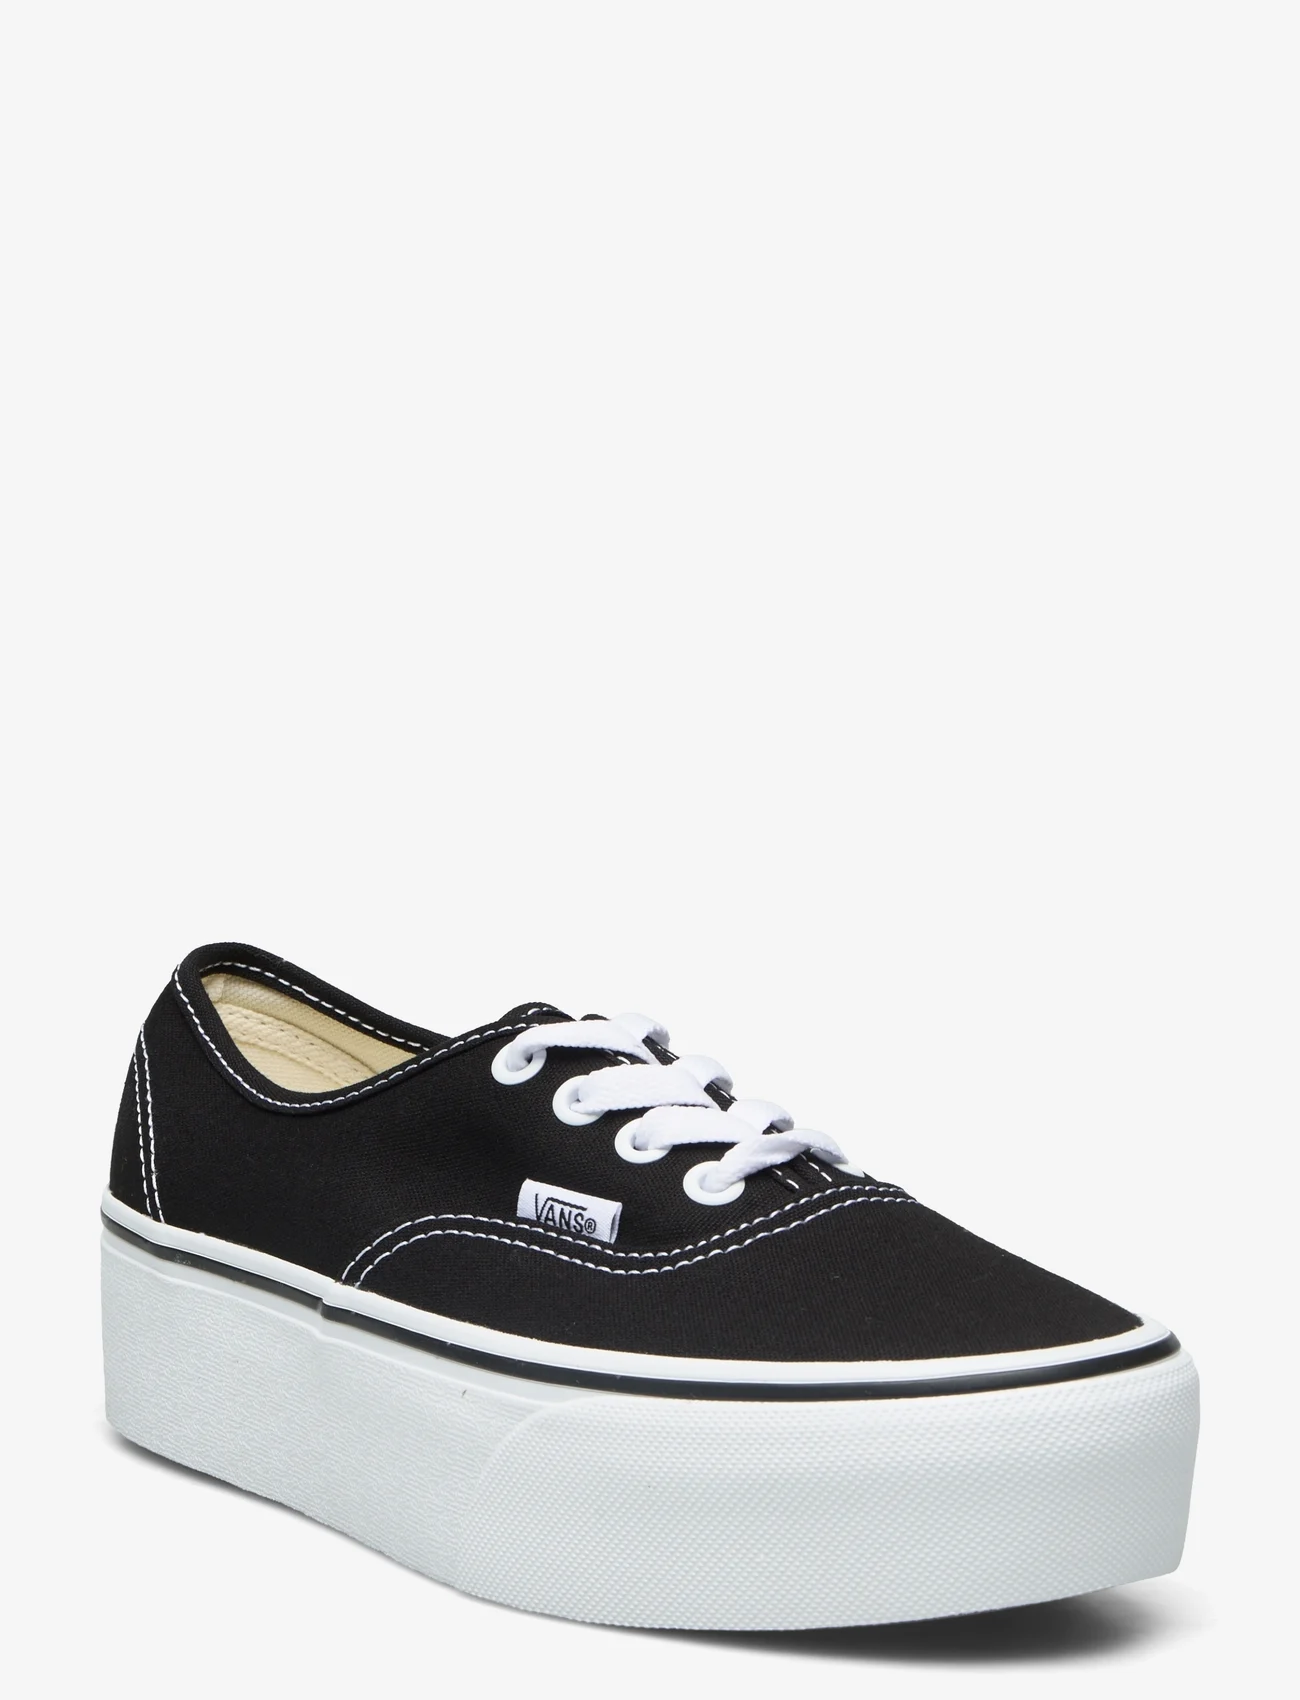 VANS - UA Authentic Stackform - sneakers - canvas black/true white - 0